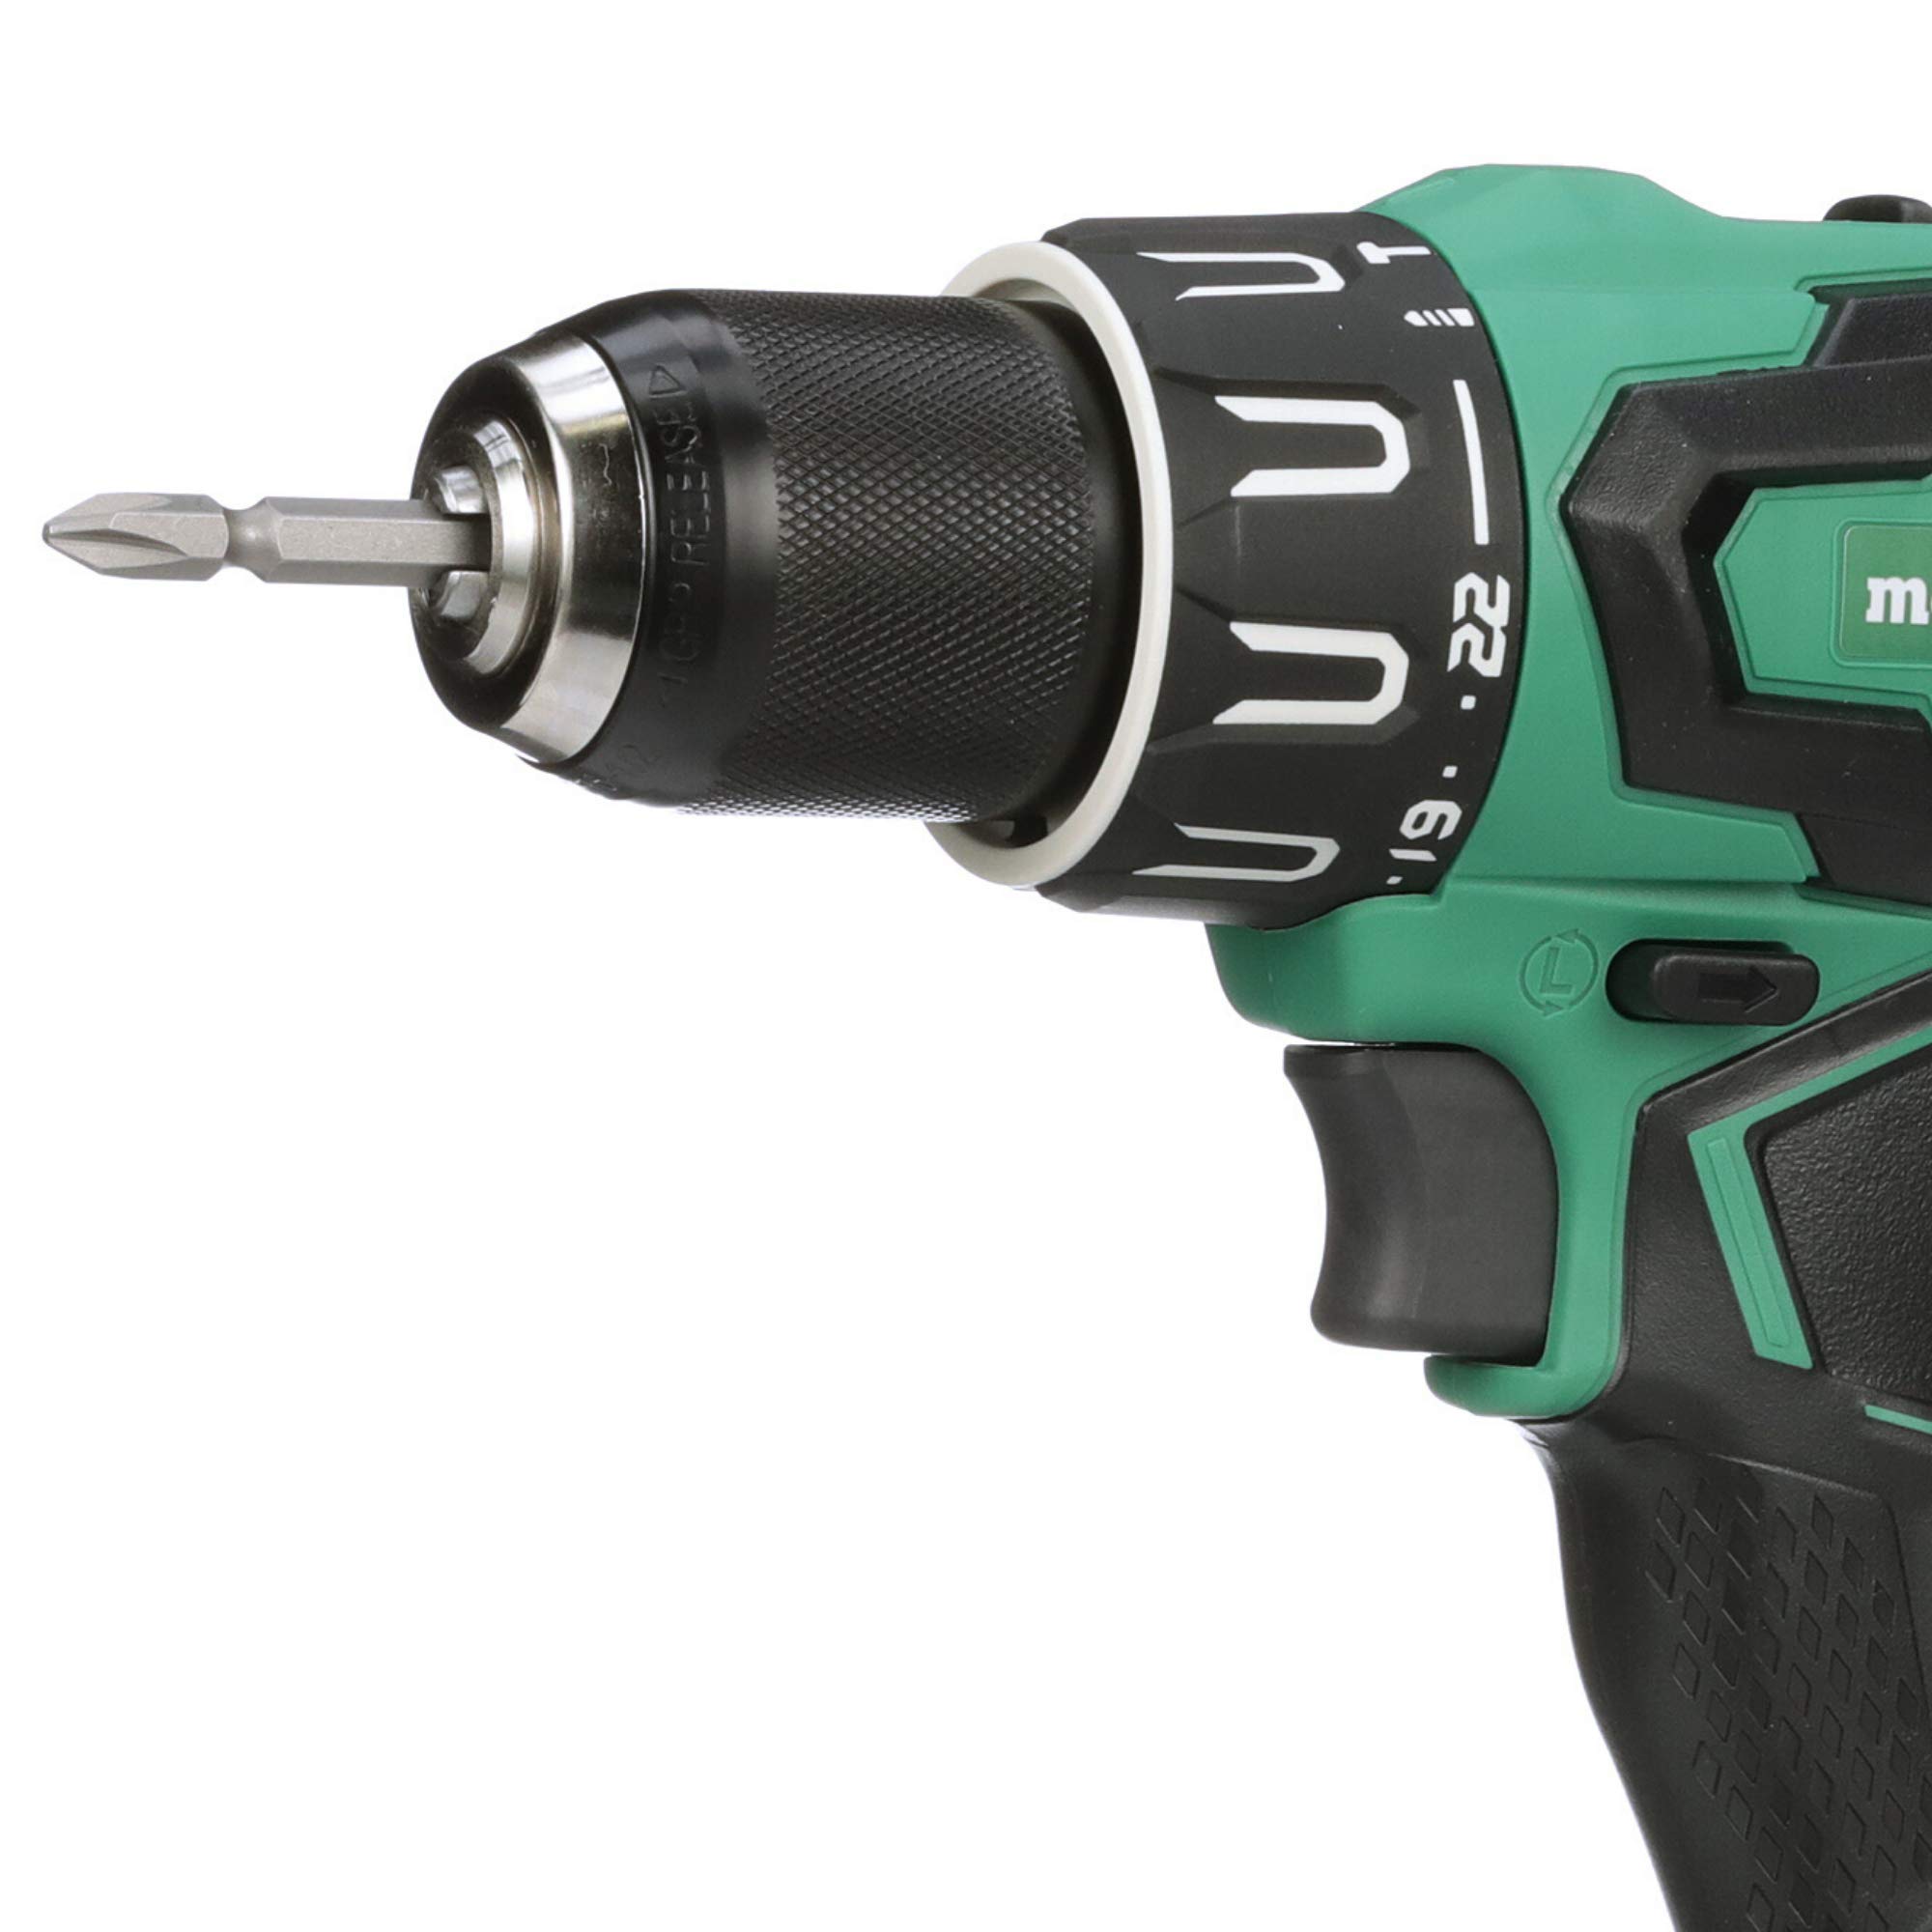 Metabo HPT 18V Cordless Hammer Drill | Includes Two Batteries | 1-36V/18V Multivolt 5.0 Ah & 1-18V Compact 3.0 Ah Battery | 1/2